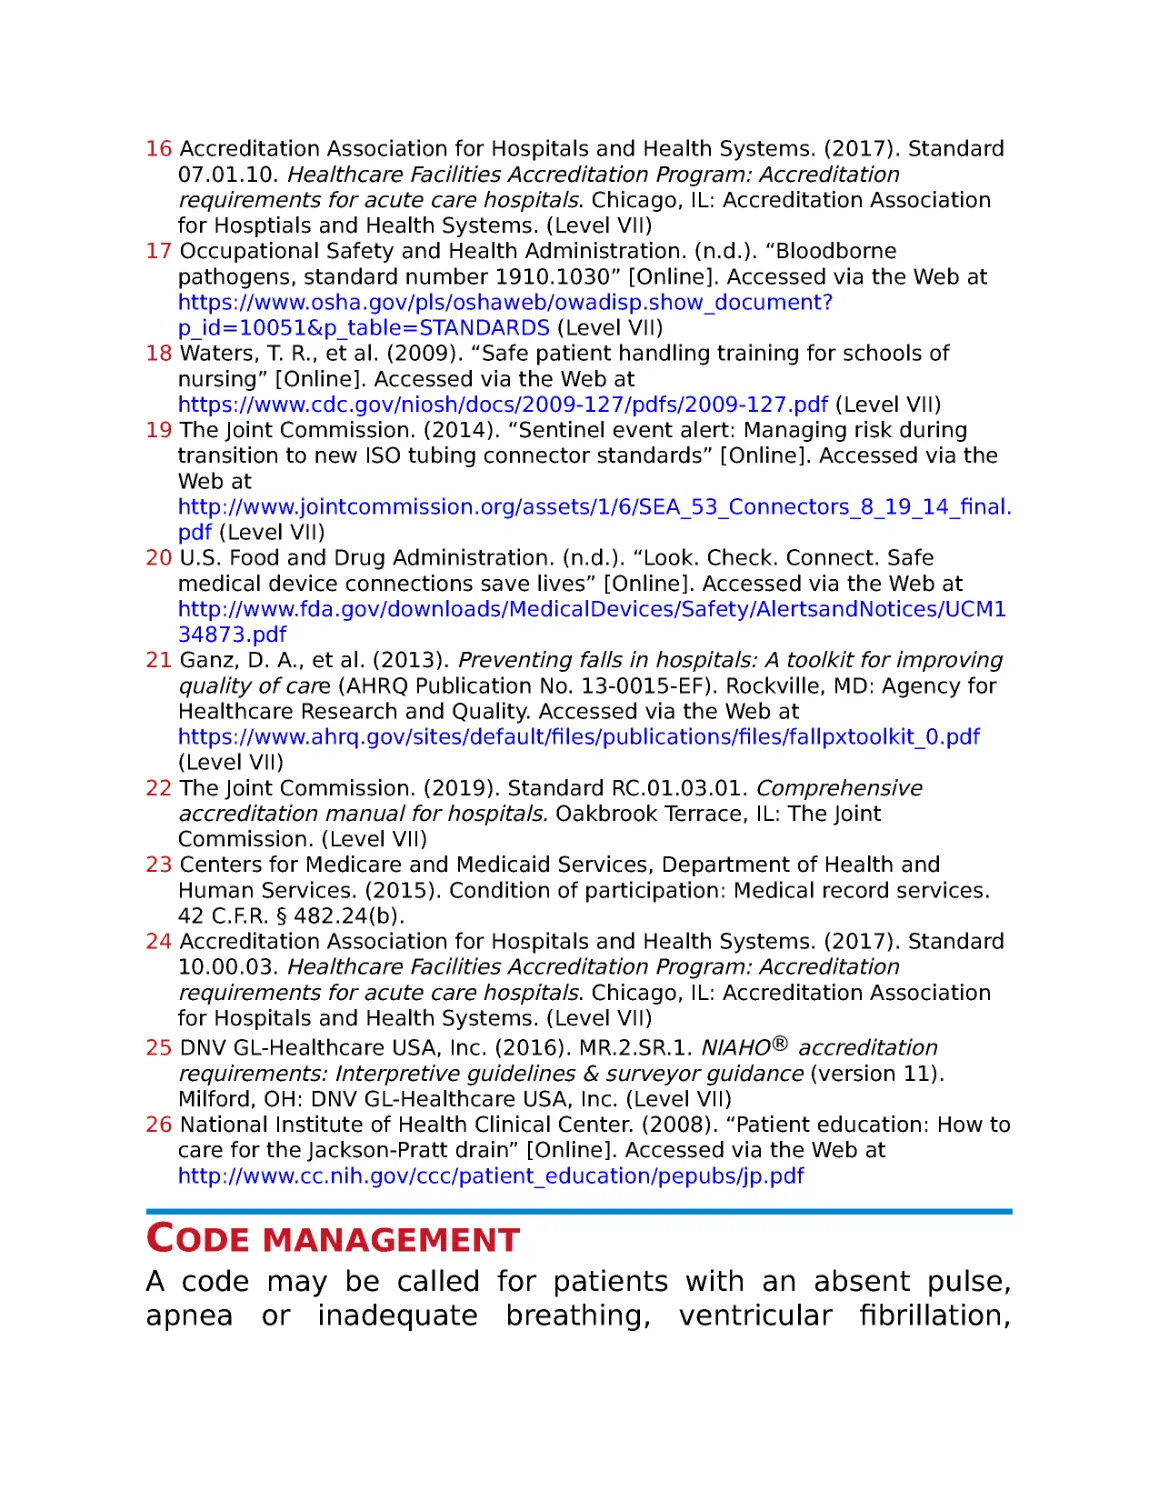 Code management